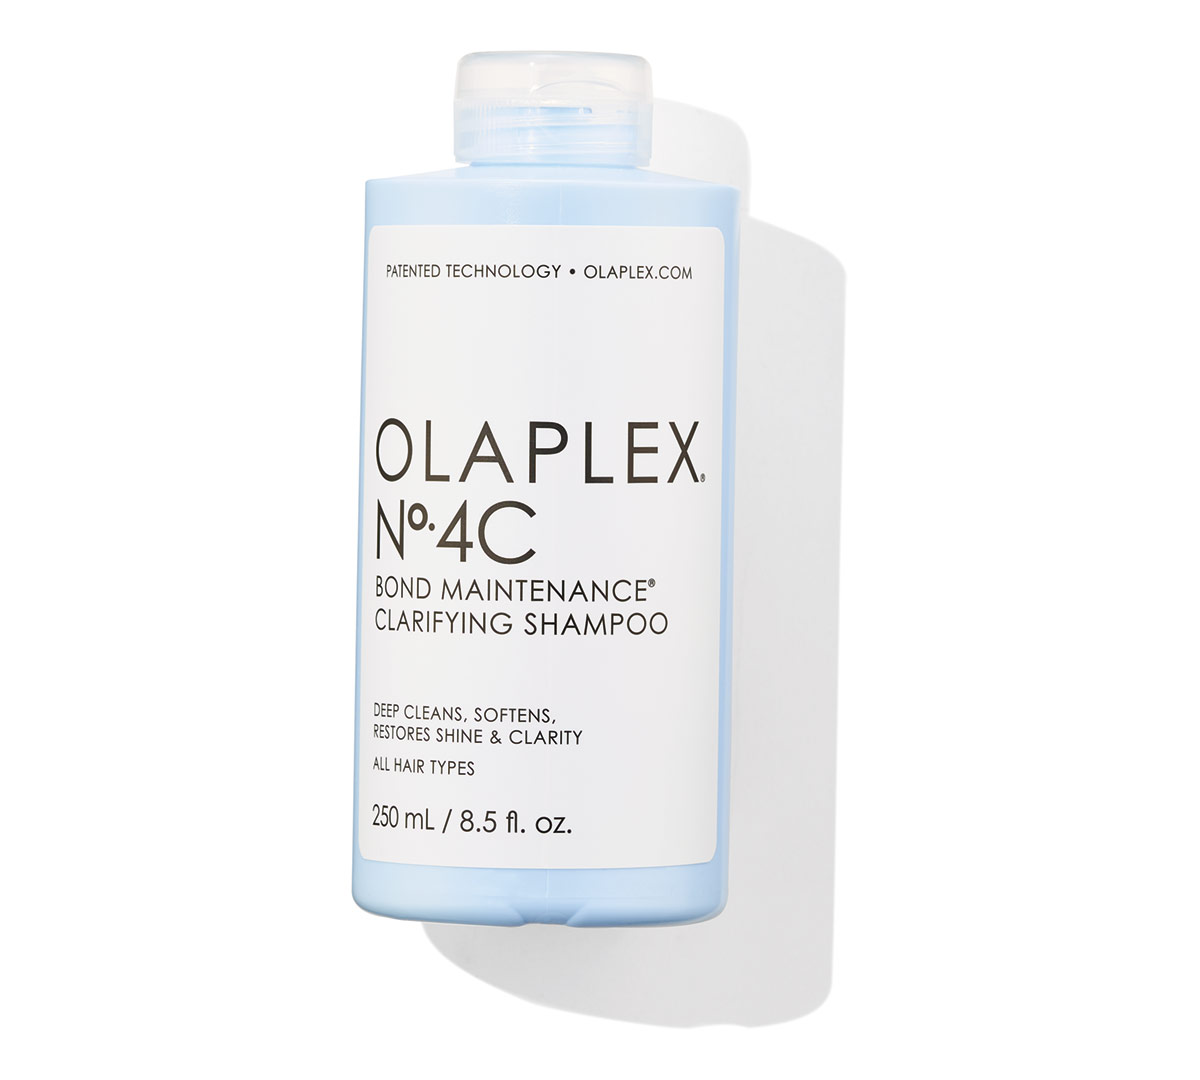 The Best Clarifying Shampoo: No. 4C Bond Maintenance Clarifying Shampoo